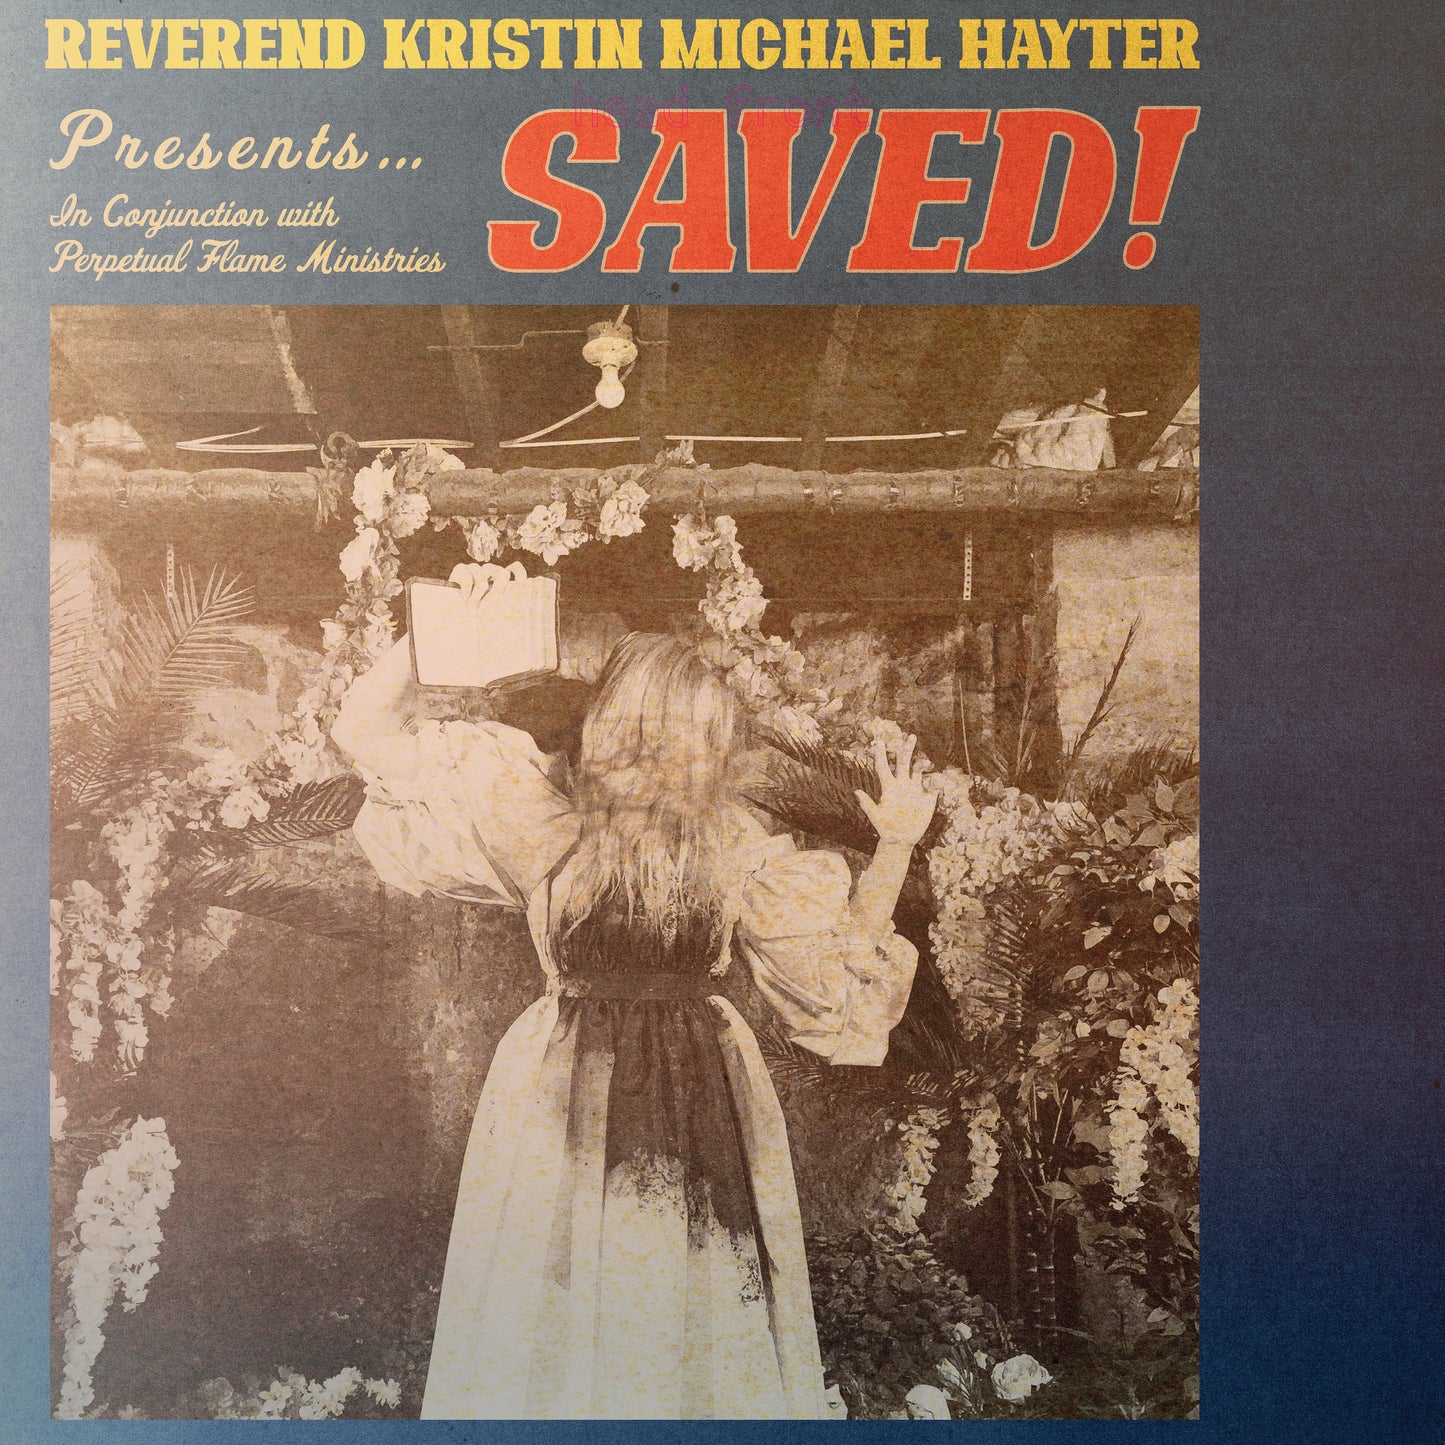 Reverend Kristin Michael Hayter SAVED!